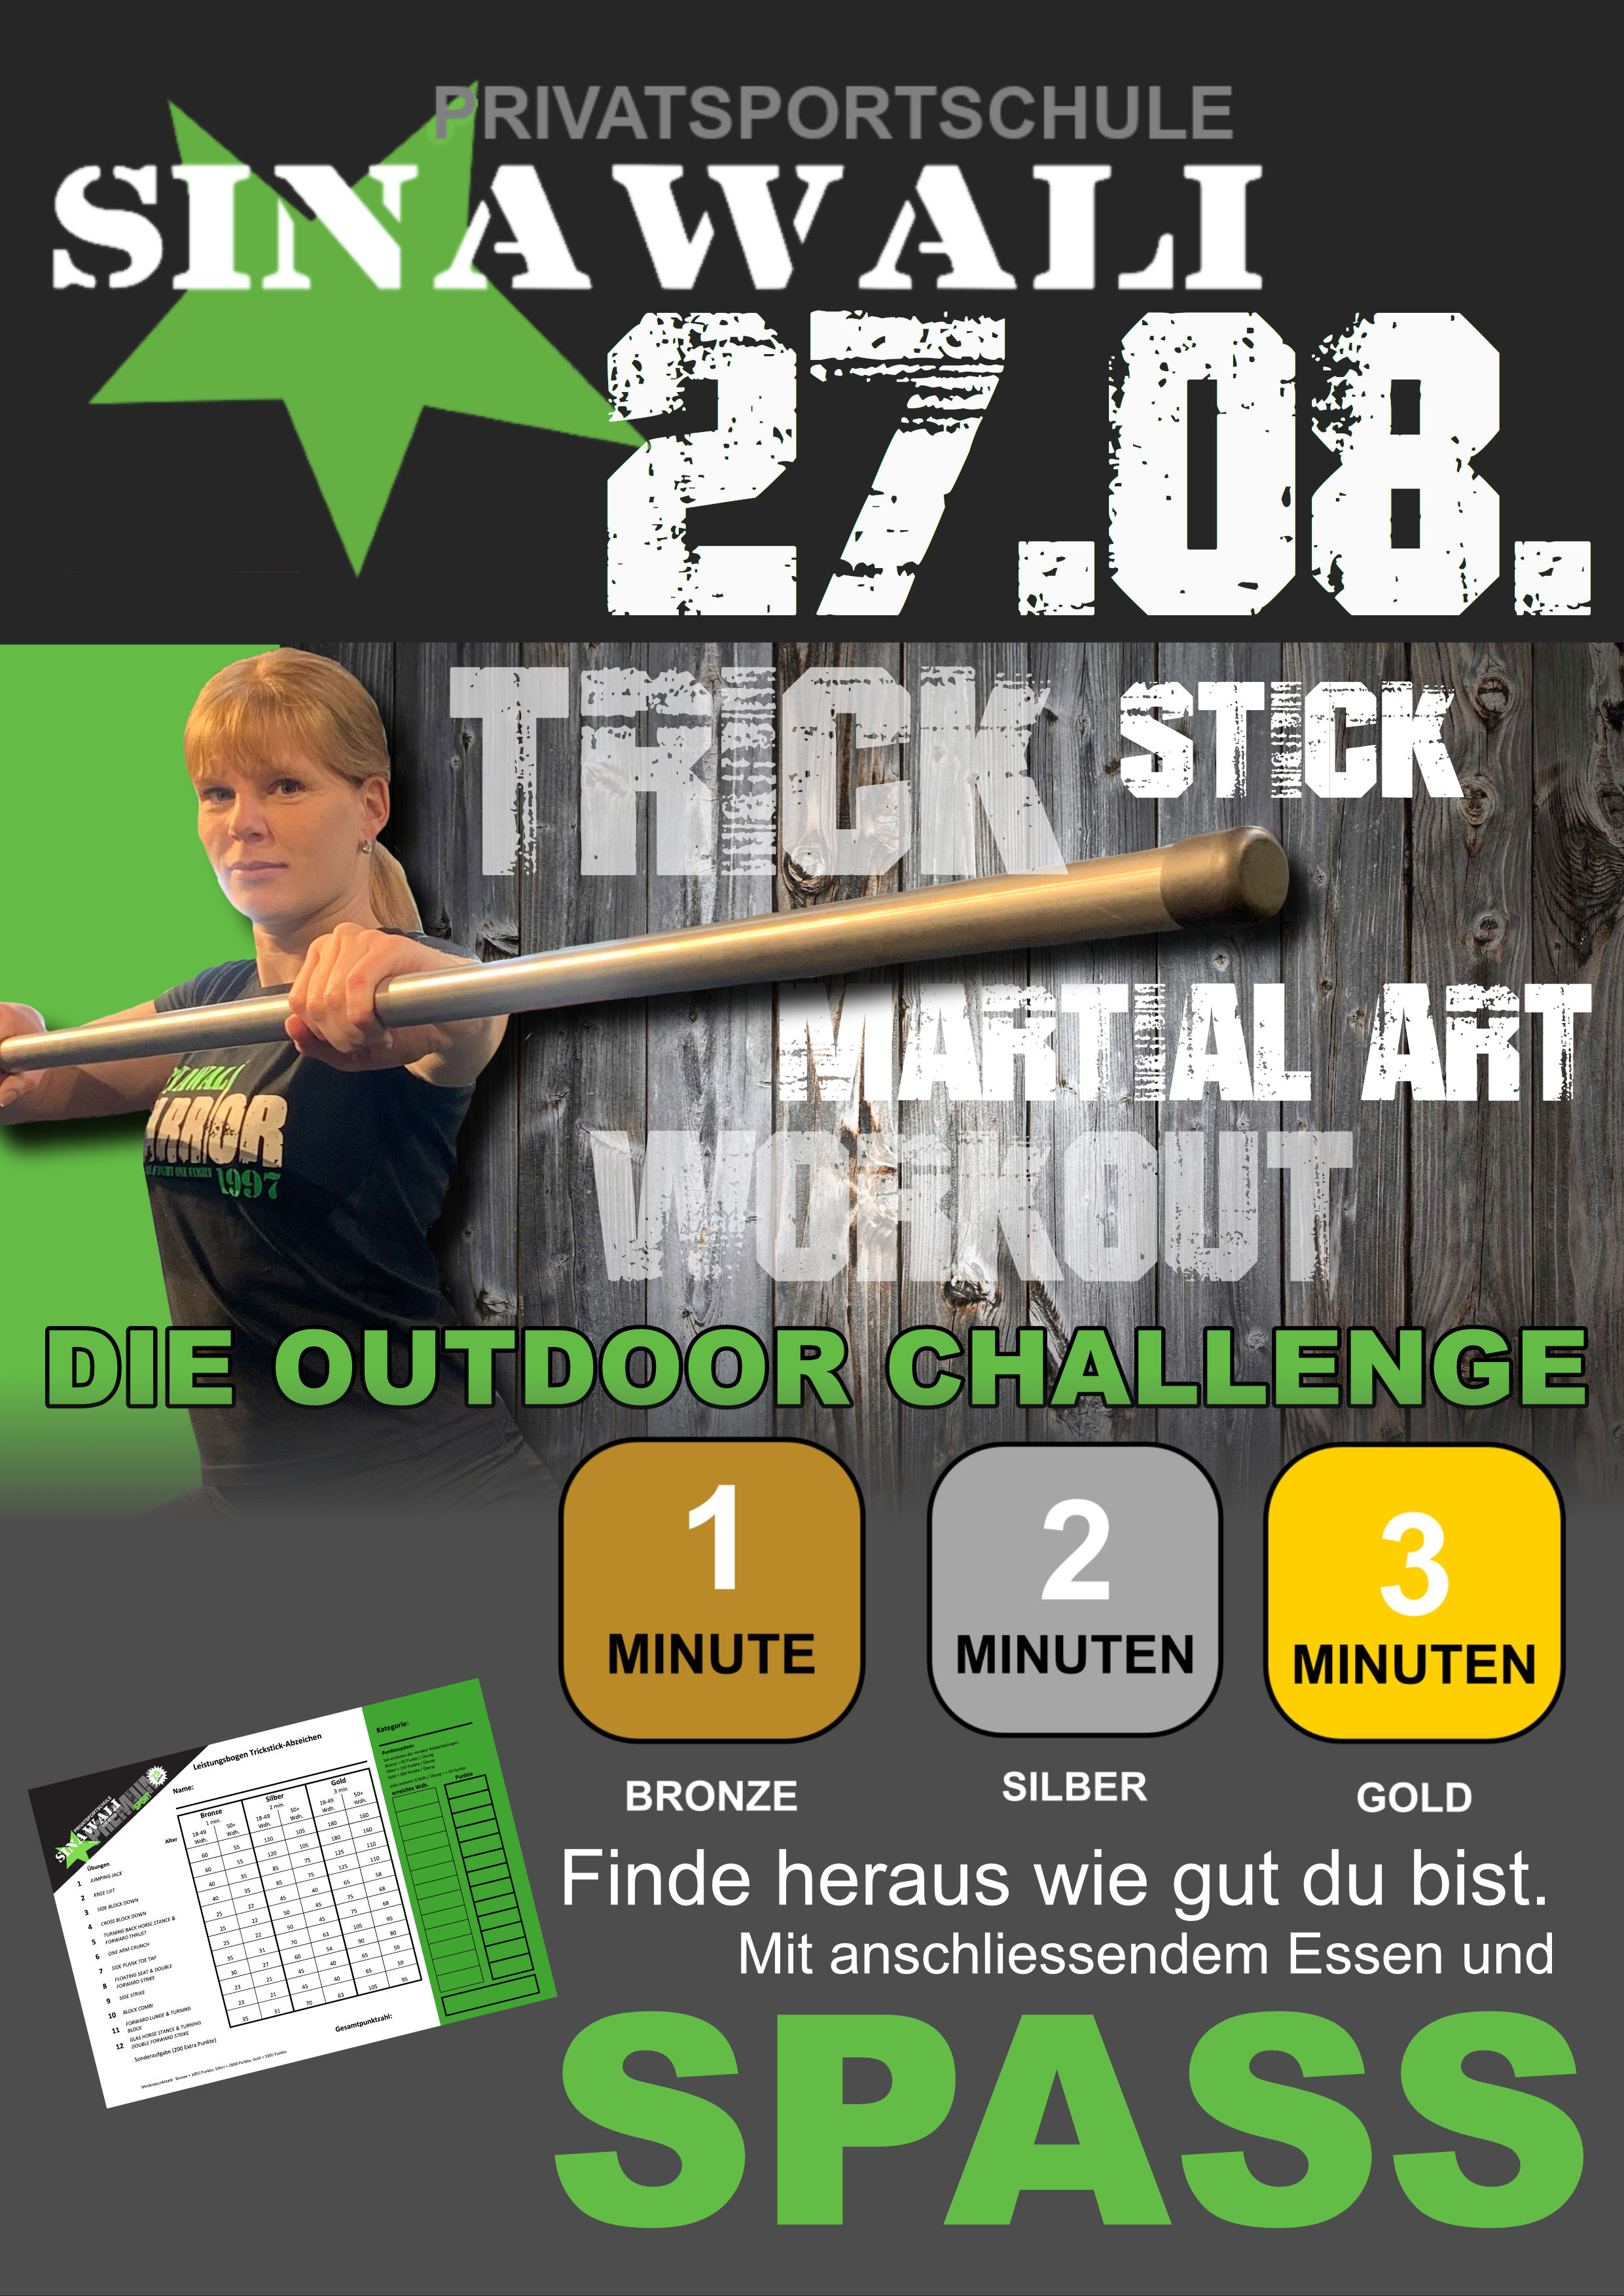 27.08.2022 Trick Stick Challenge